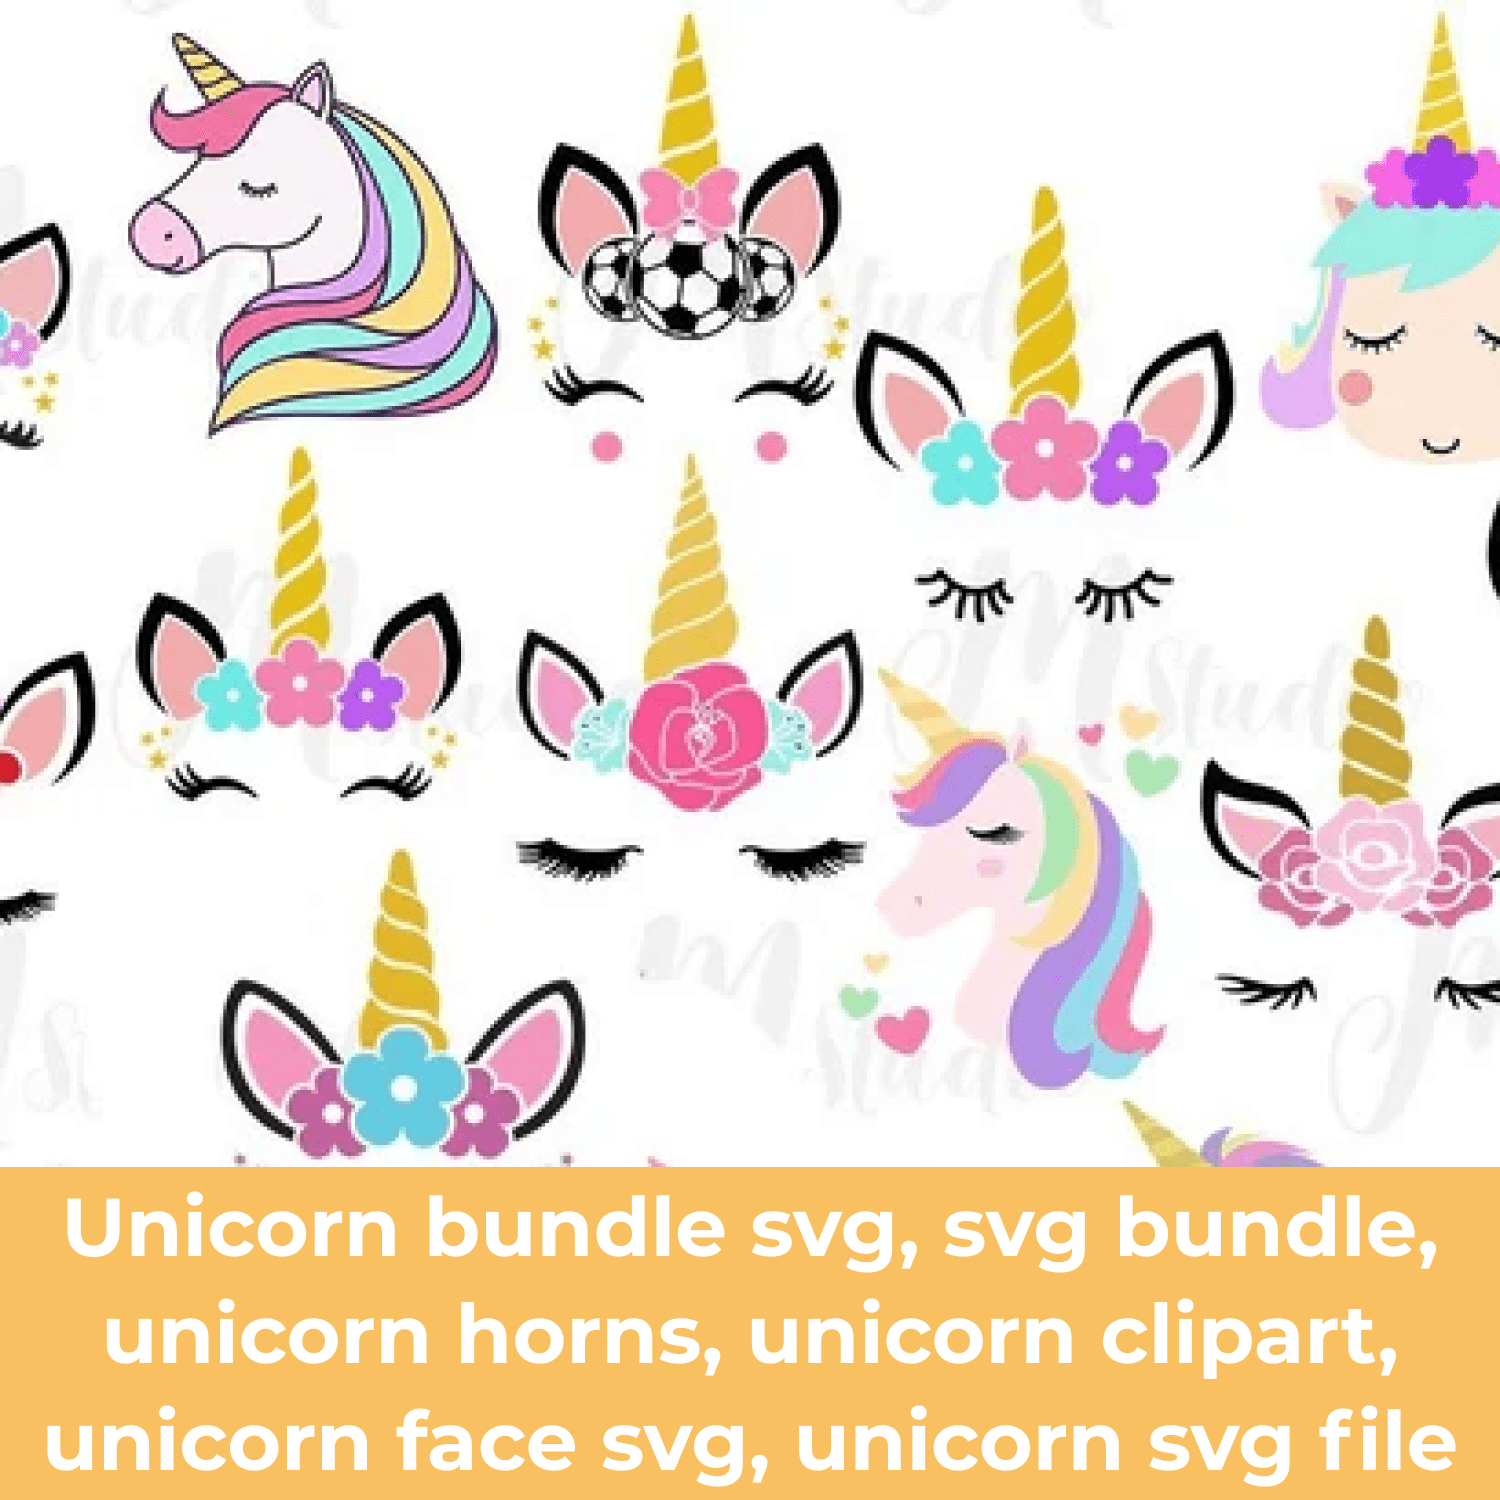 unicorn bundle svg.